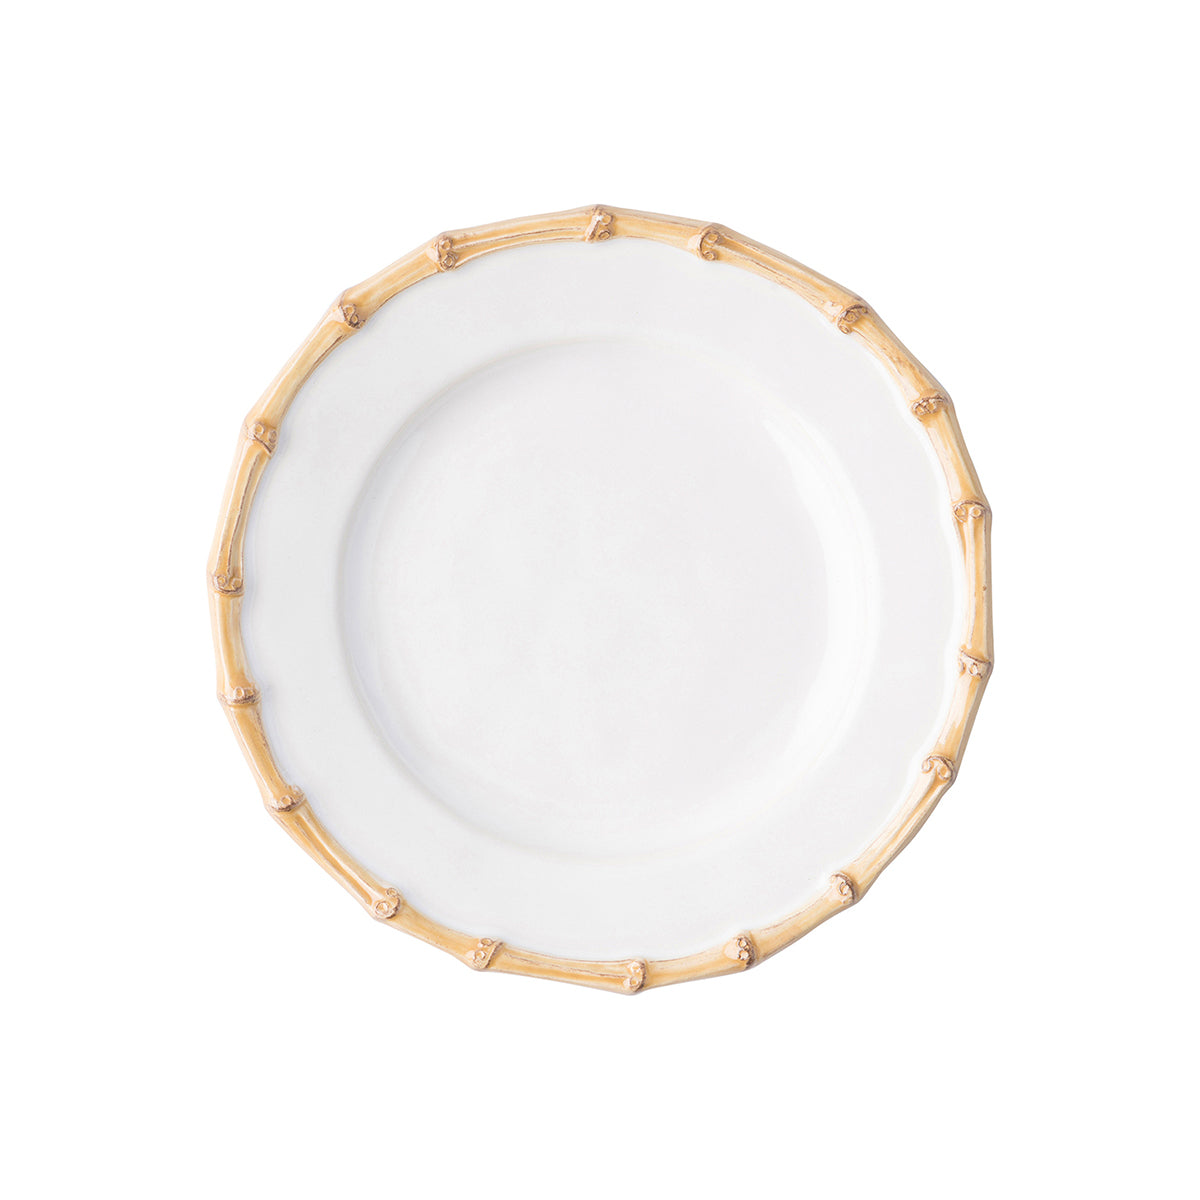 Juliska Bamboo Side/Cocktail Plate - Natural